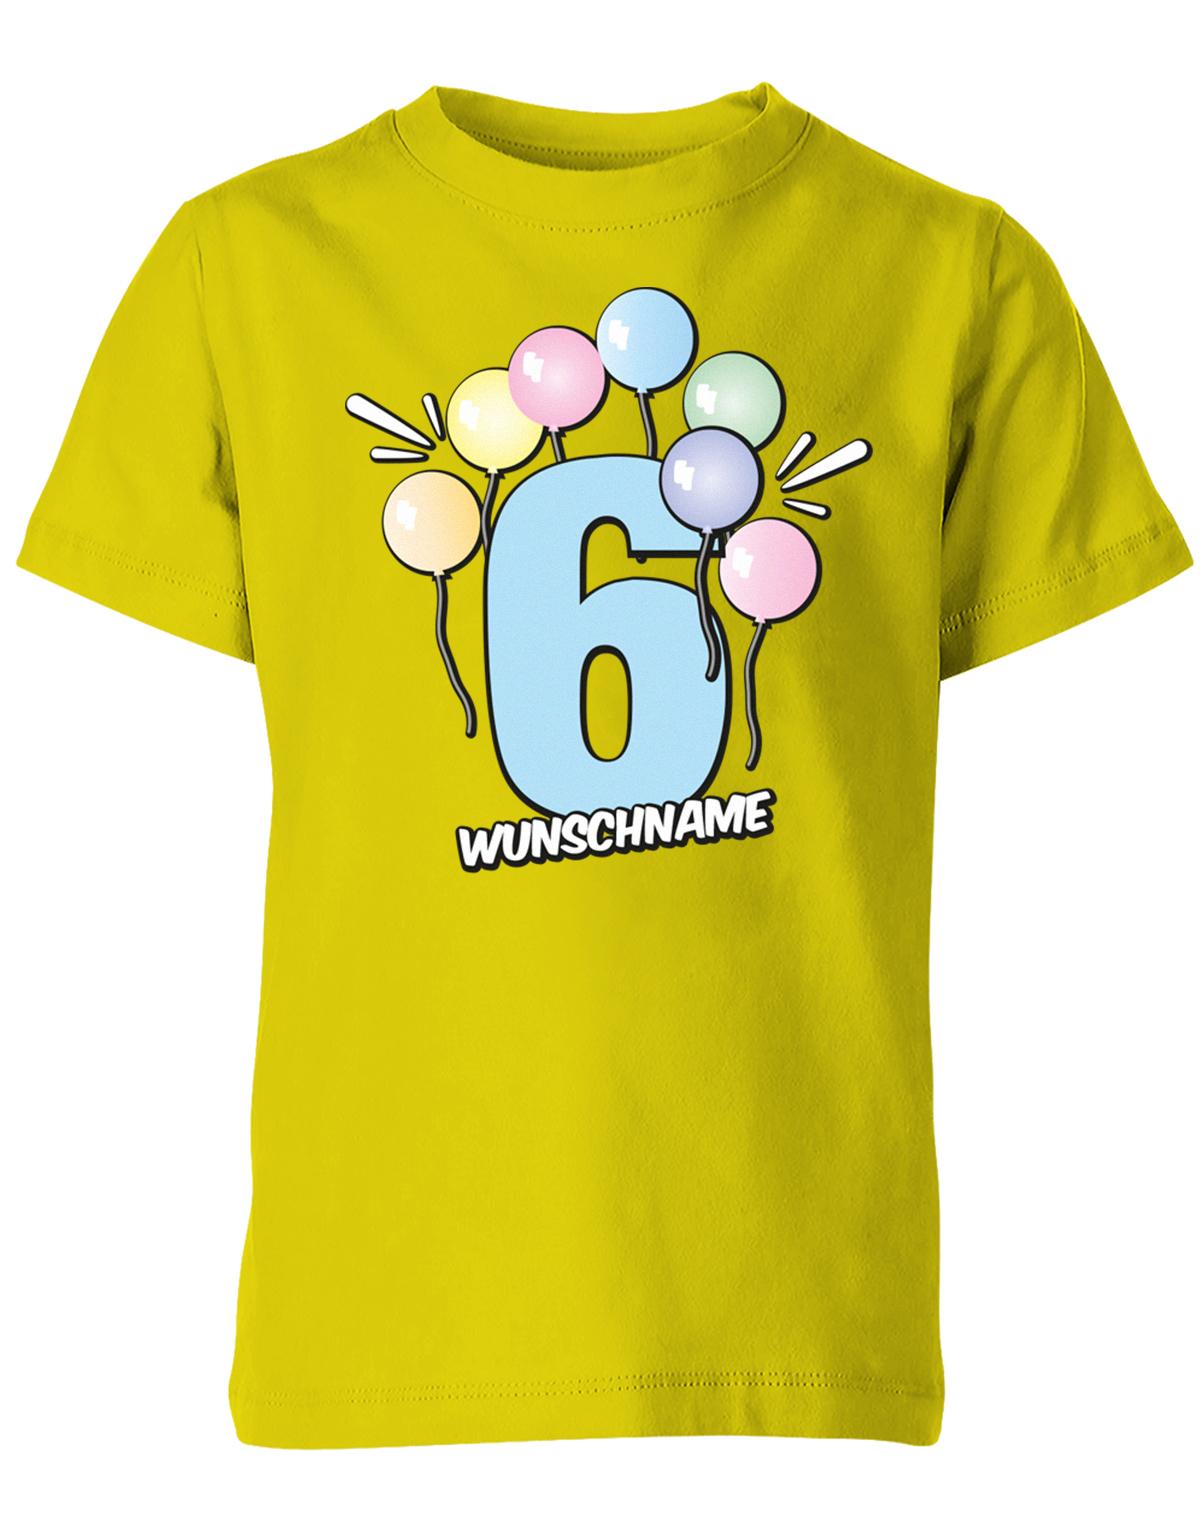 Luftballons-pastell-6-geburtstag-wunschname-kinder-shirt-gelb